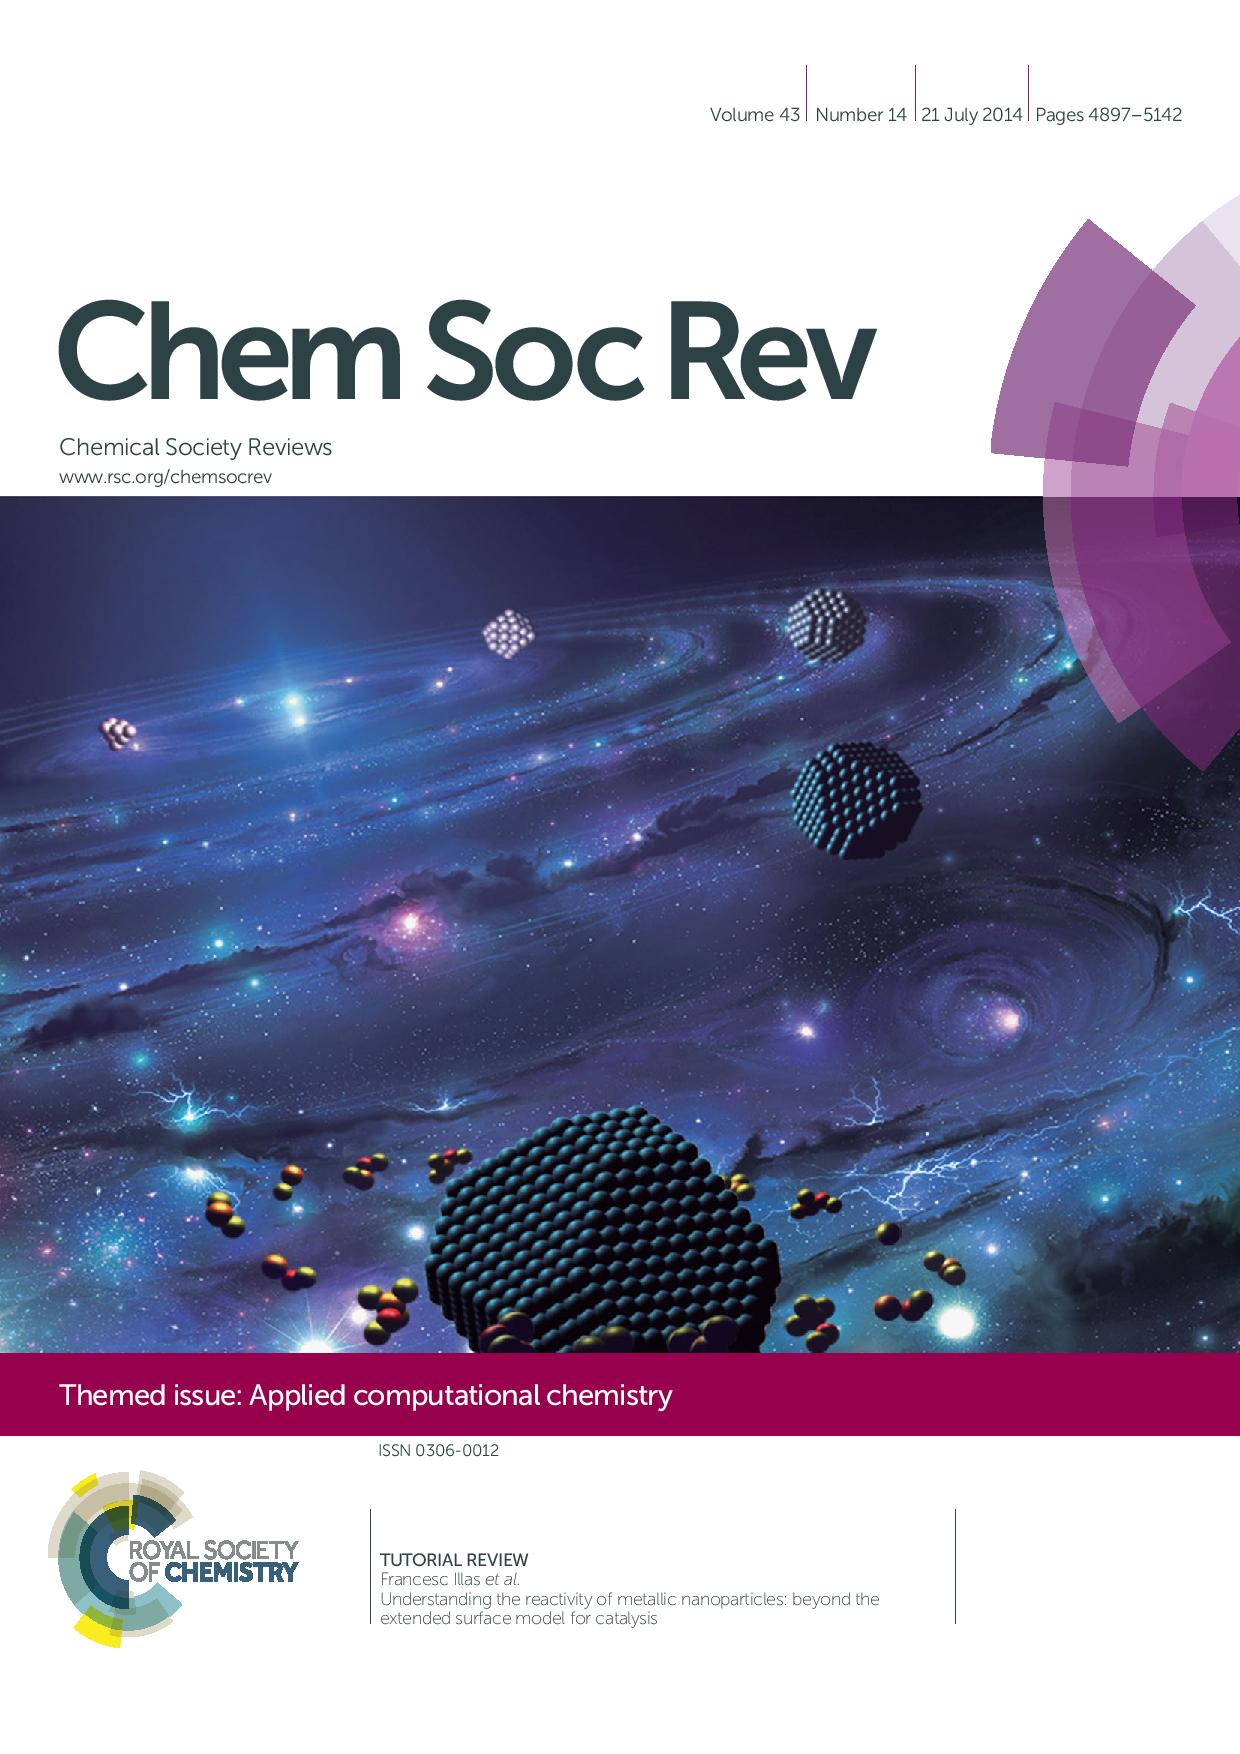 2014-06-25-Chem-Soc-Rev-43-2014-4922-4939-page-001